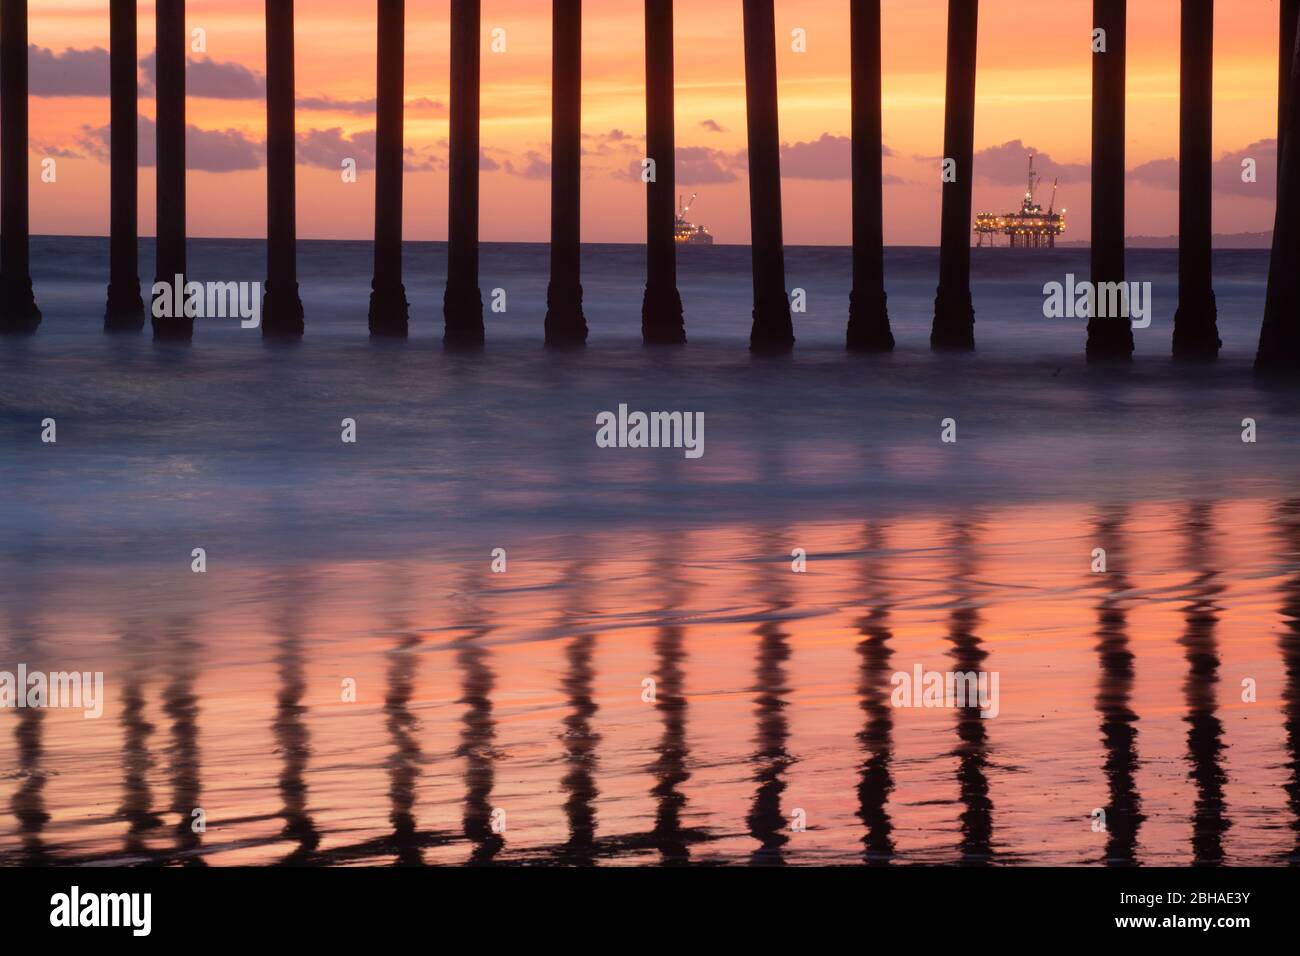 Oil rigs behind columns of Huntington Beach Pier at sunset, California, USA Stock Photo